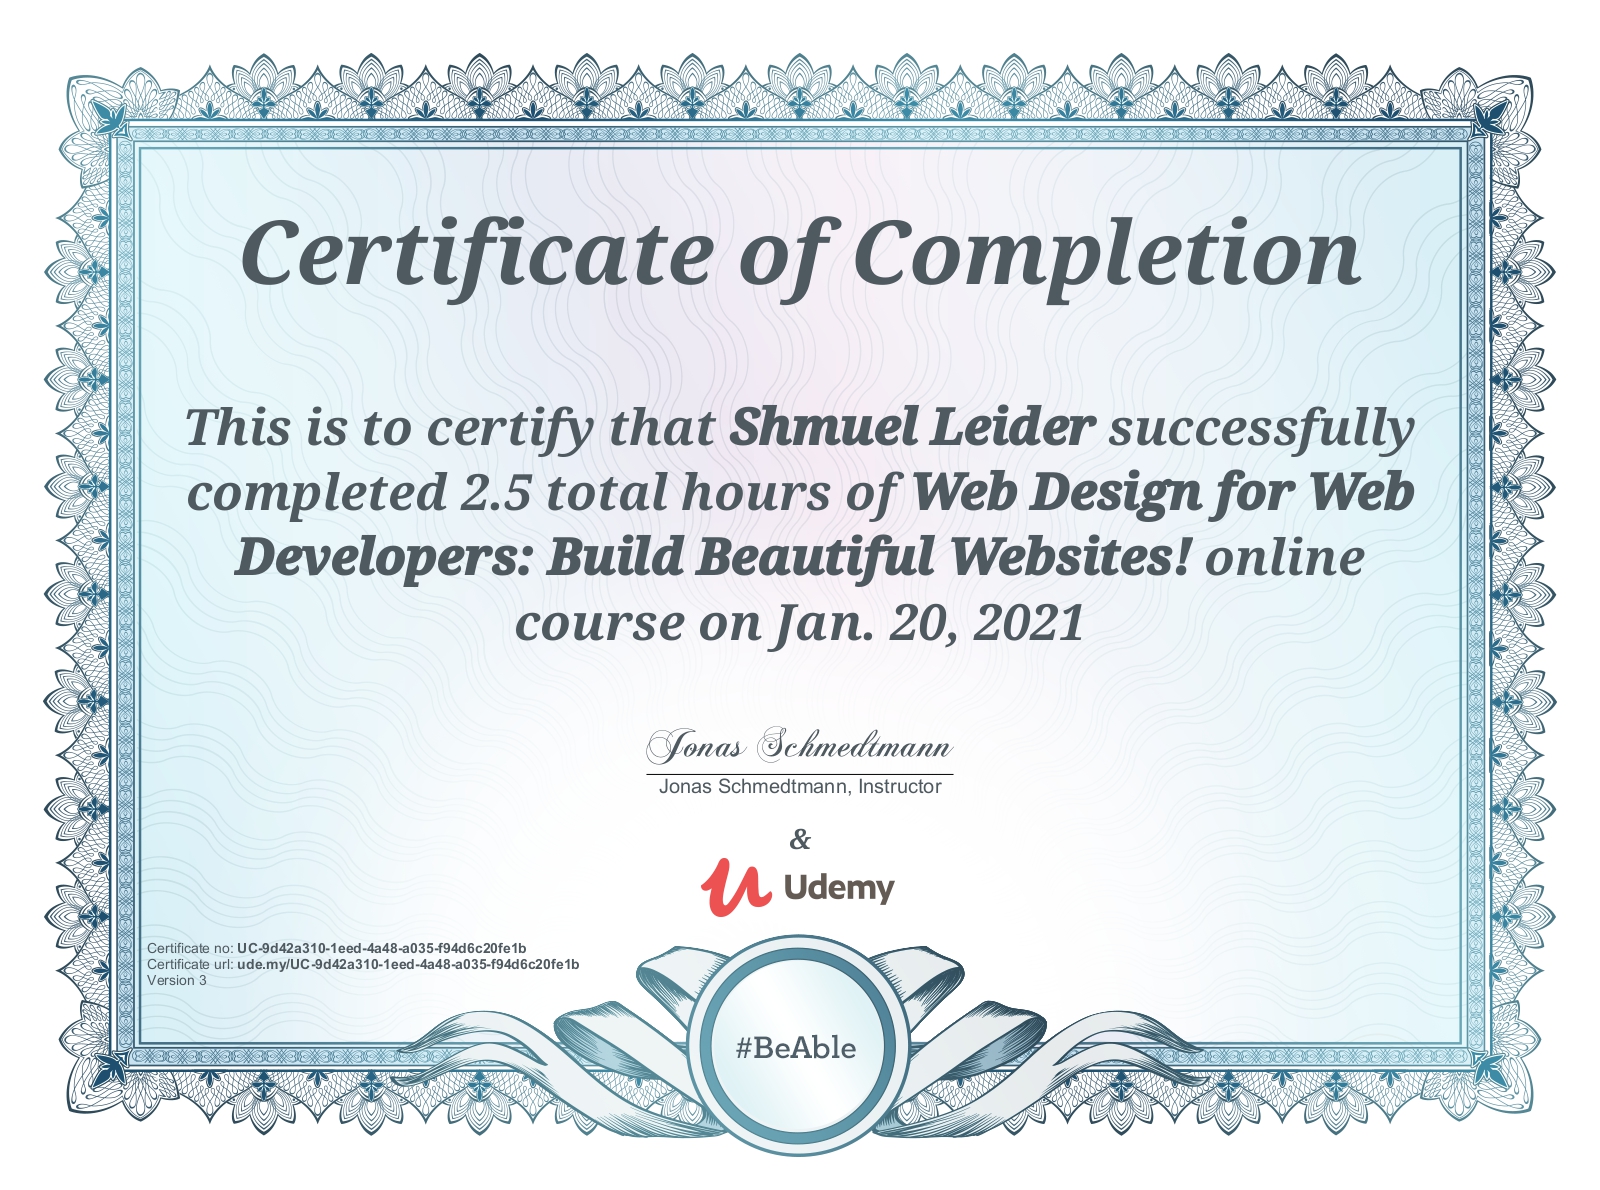 Web Design for Web Developers: Build Beautiful Websites!